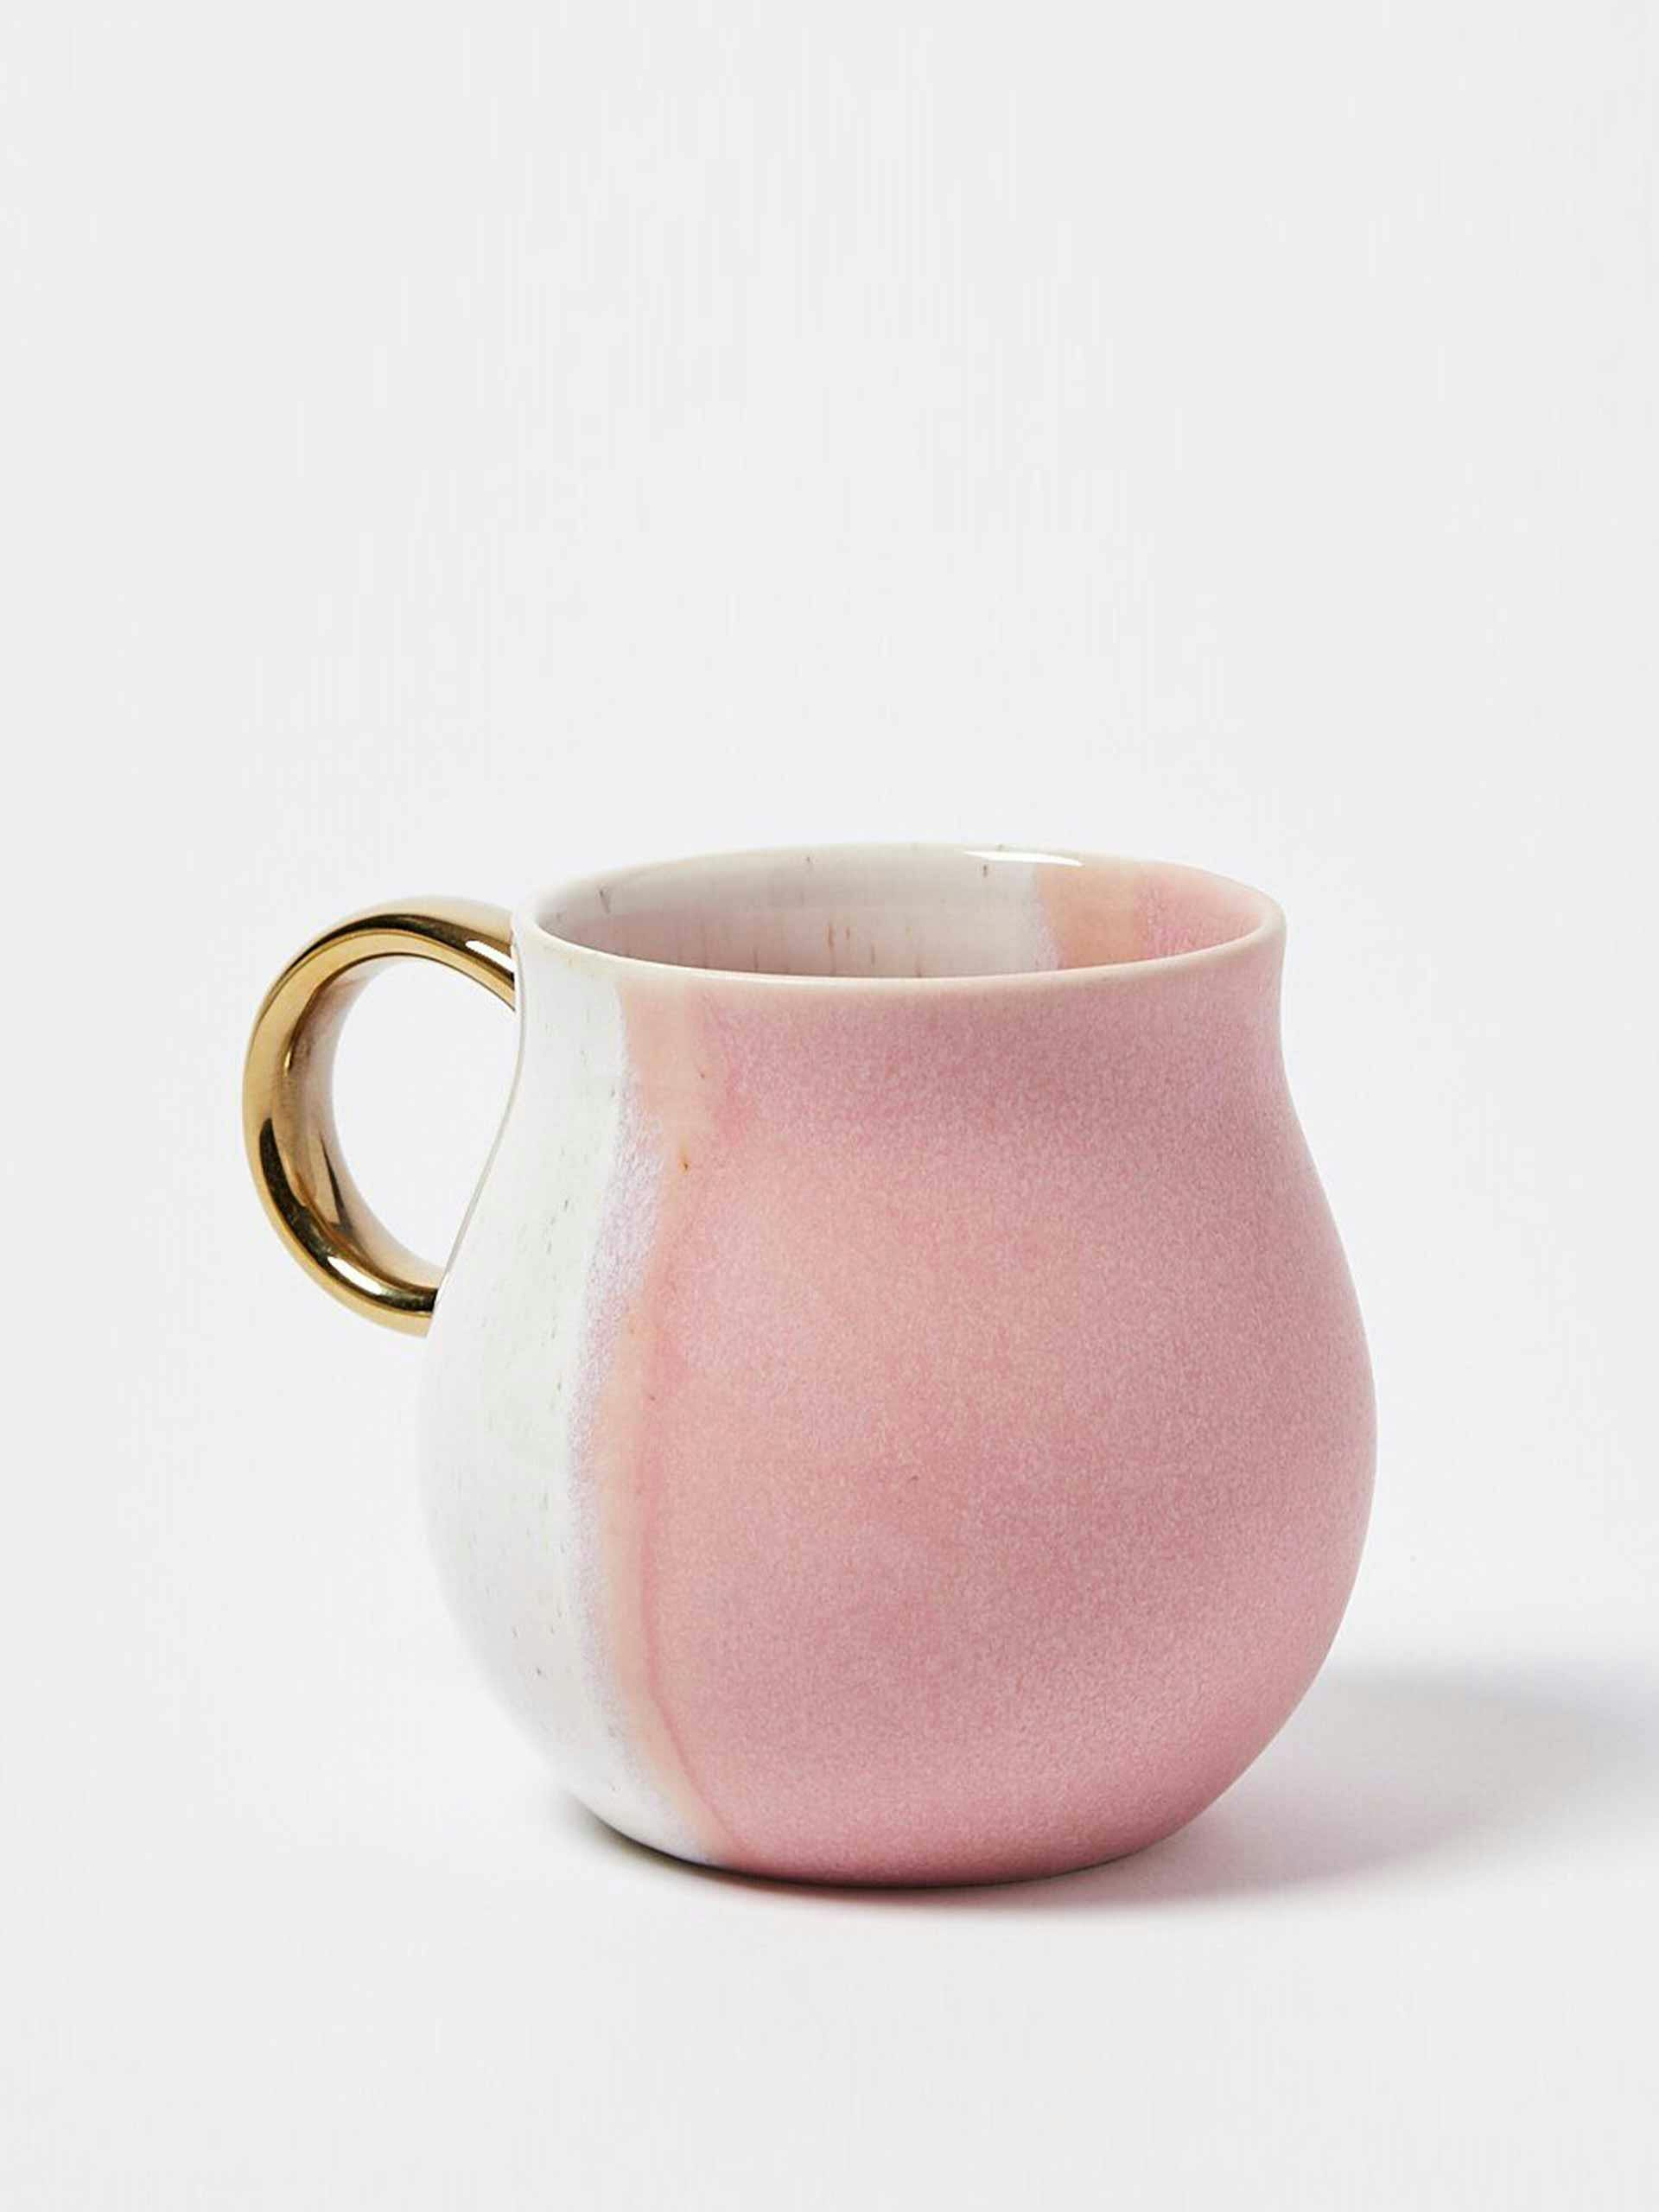 Pink glazed mug with gold handle